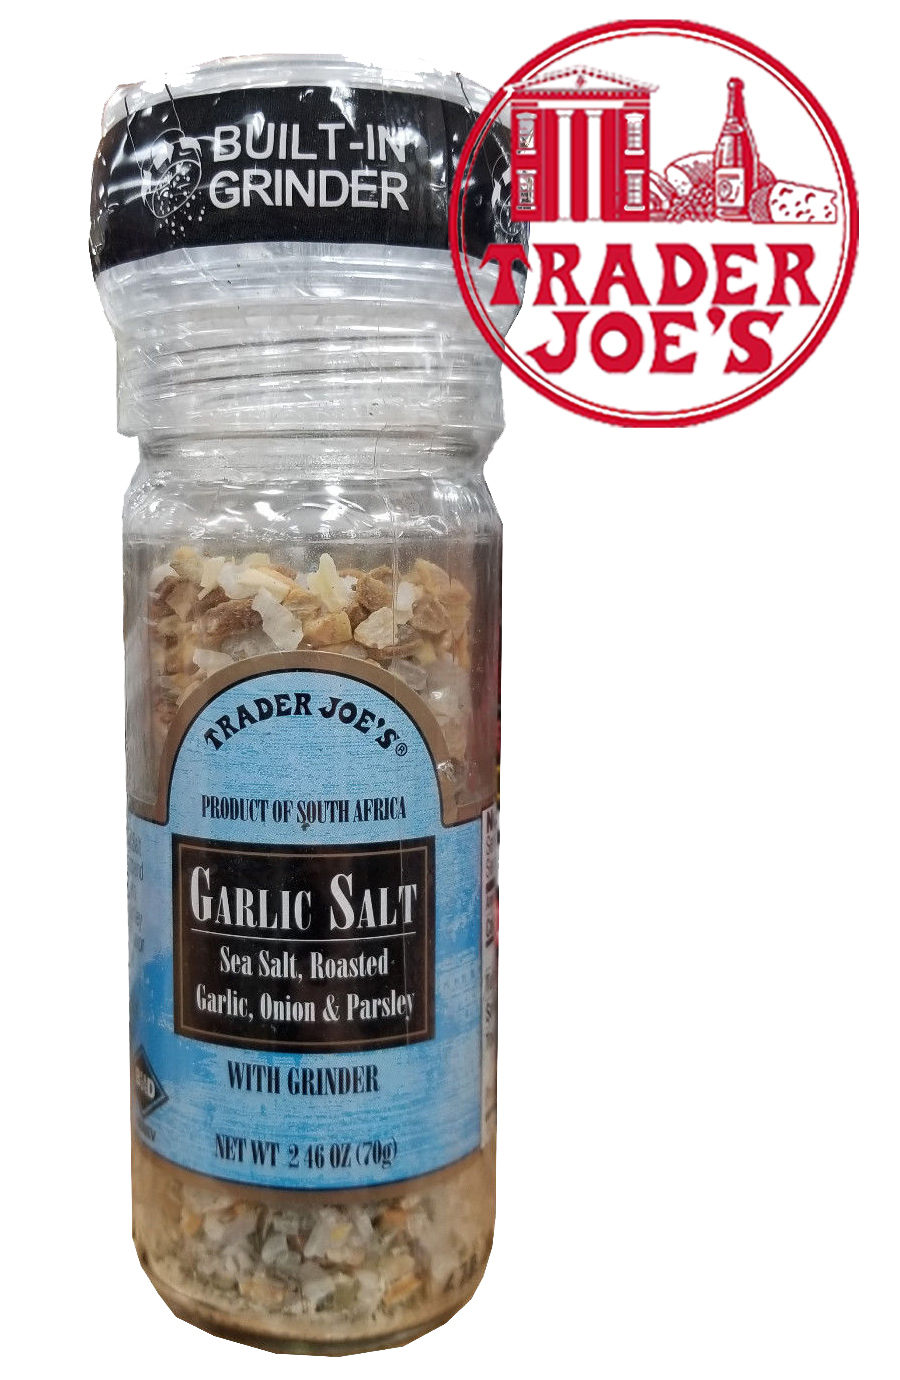  TRADER JOE'S Garlic Salt with Grinder 2.46 oz / 70g  - $7.90